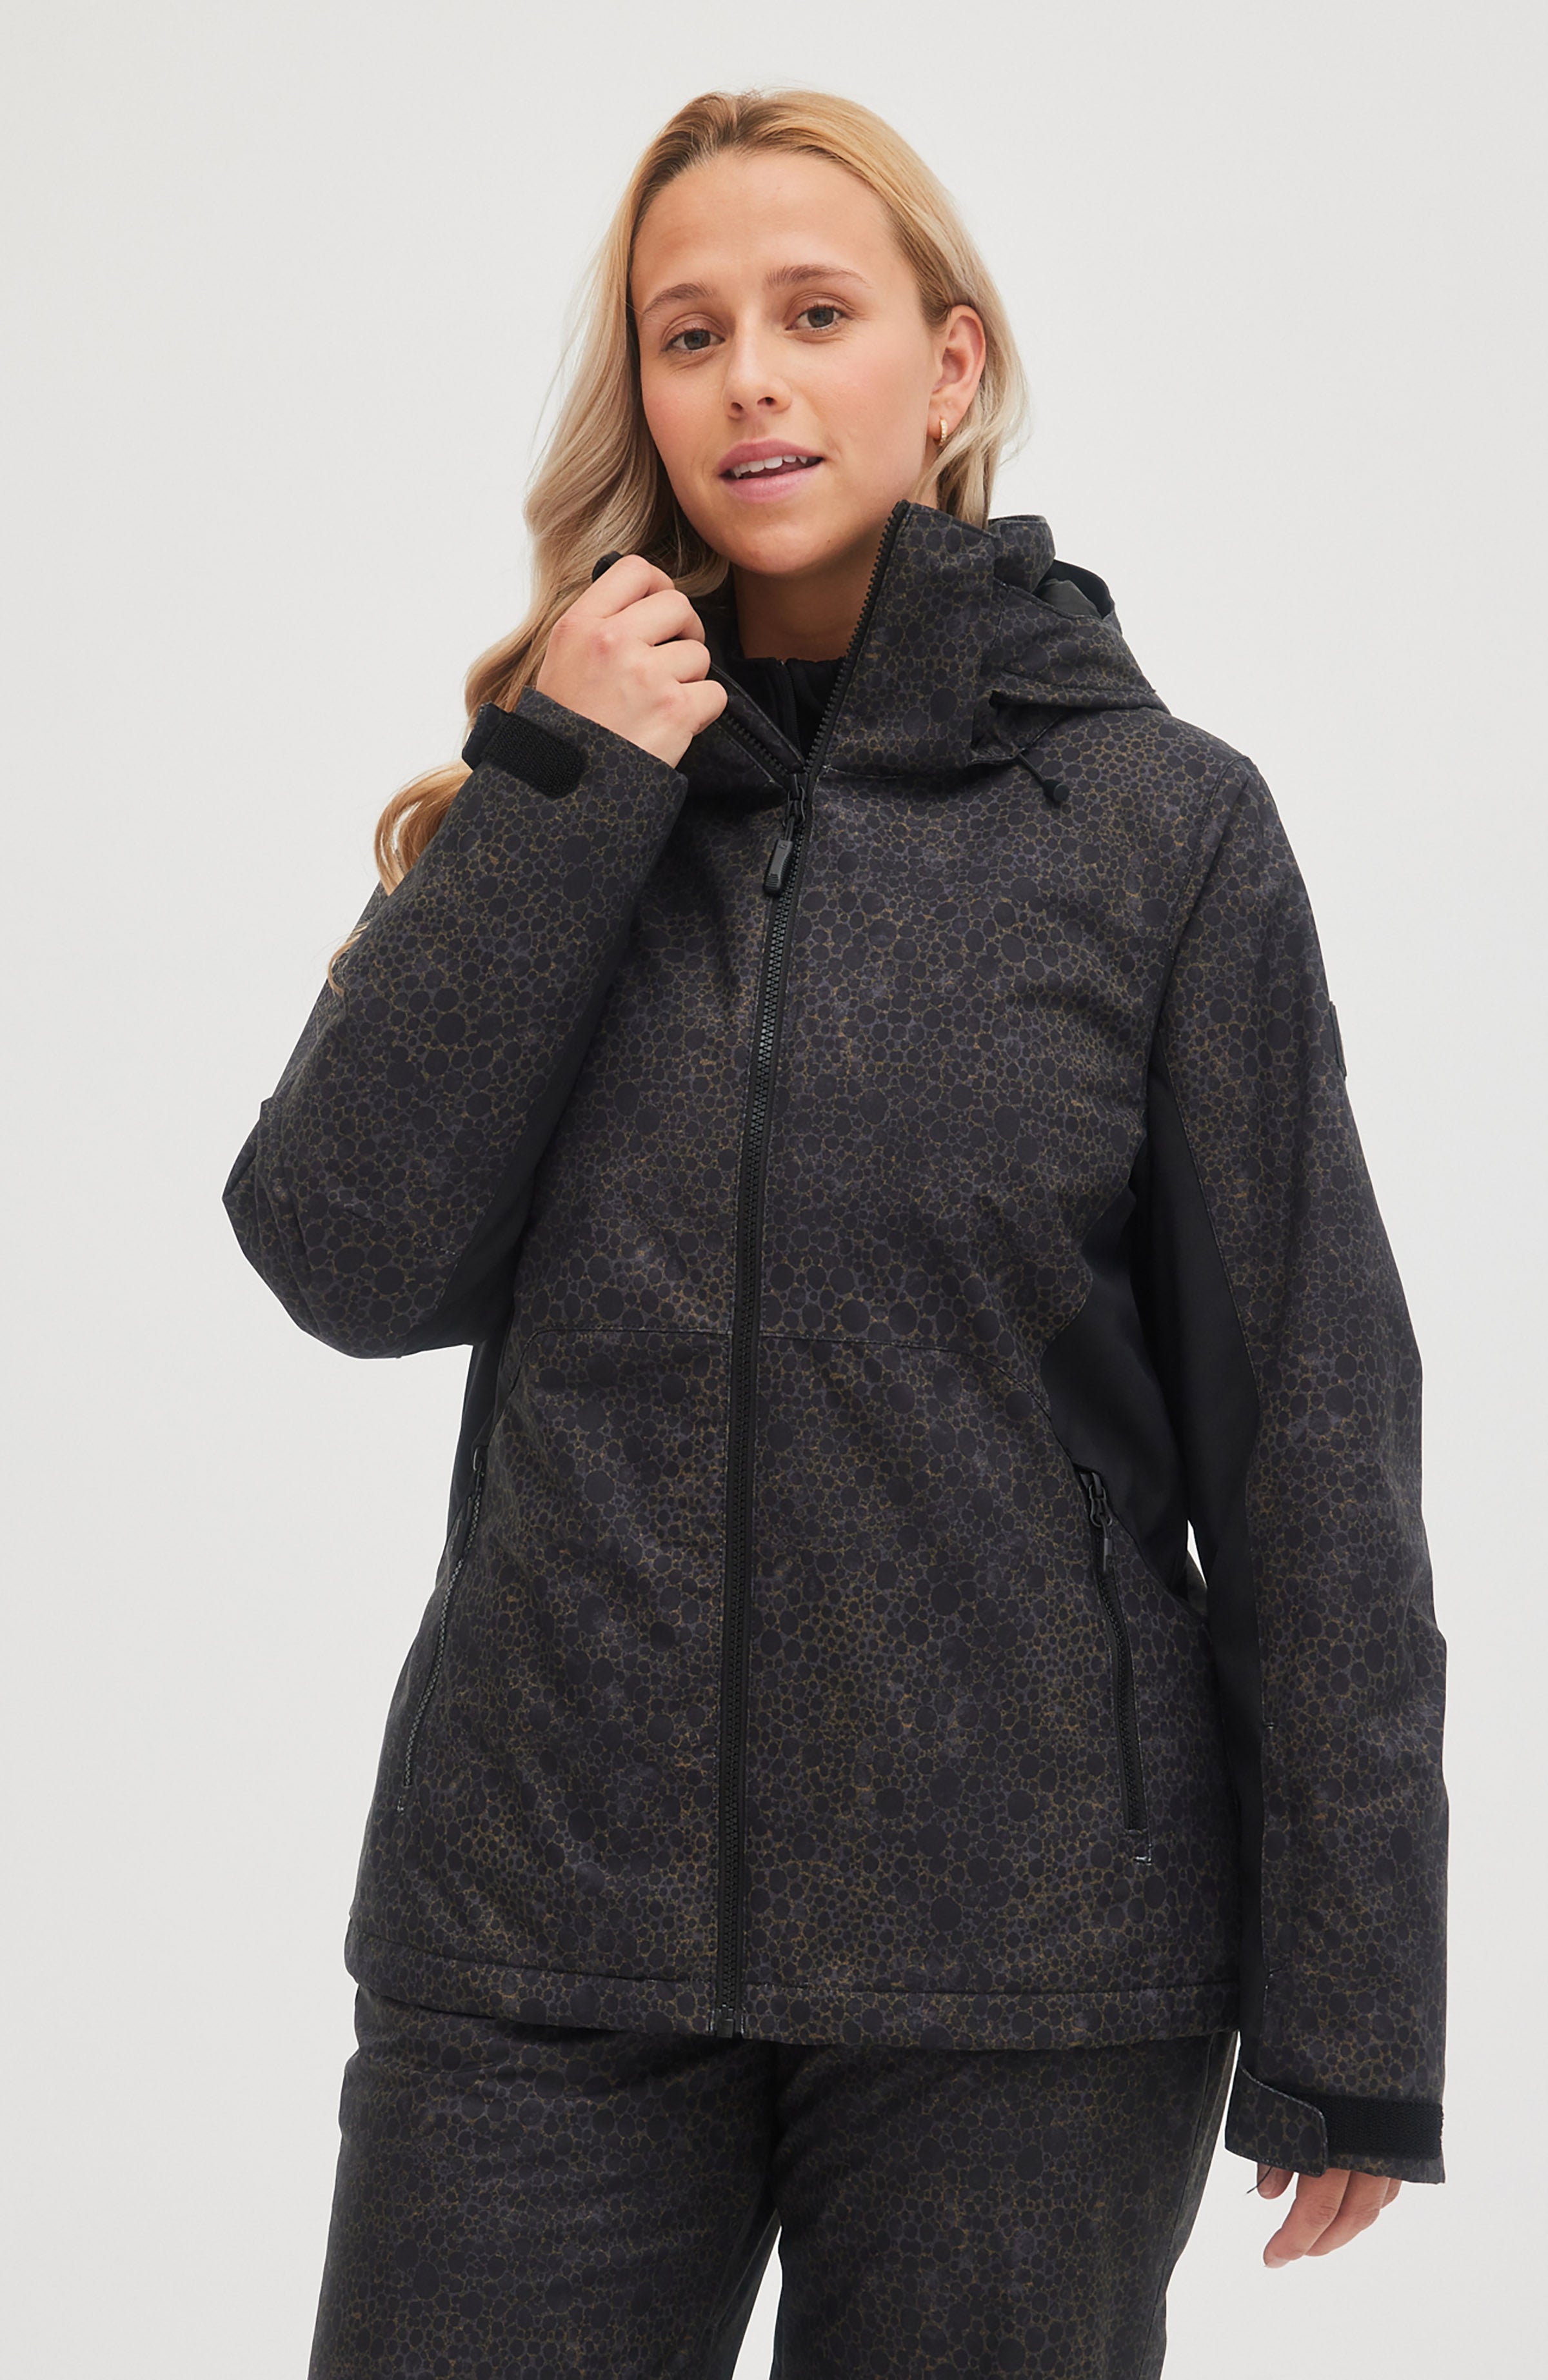 Women ski coats. Ski & snowboard jackets – O'Neill UK